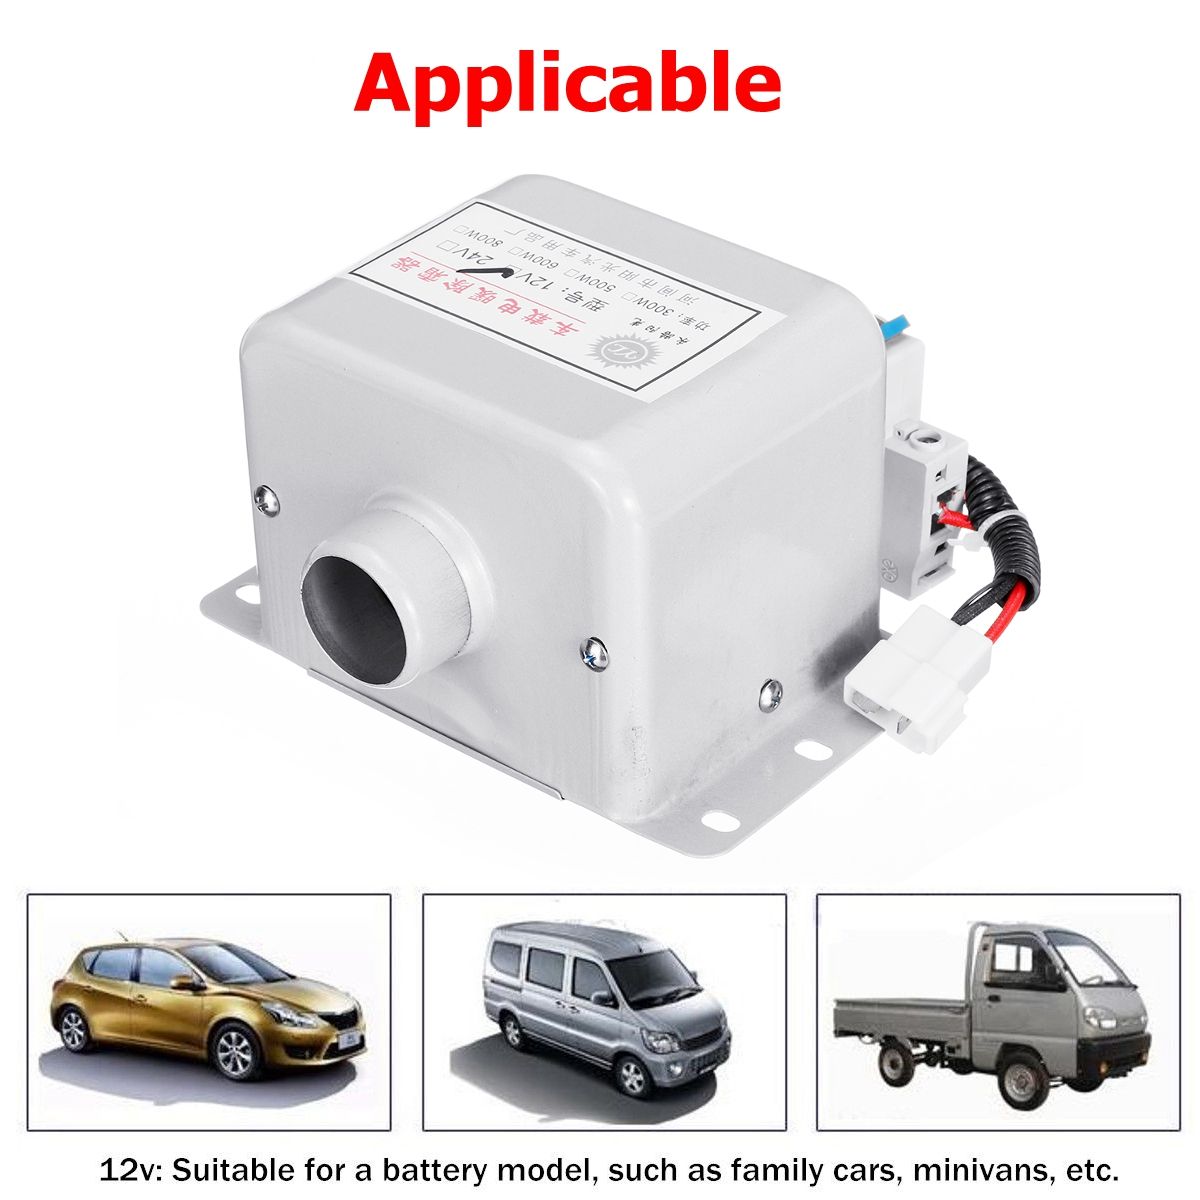 12V-Single-Hole-Car-Heater-Car-Truck-Defrost-Fog-Electric-Heater-1467881